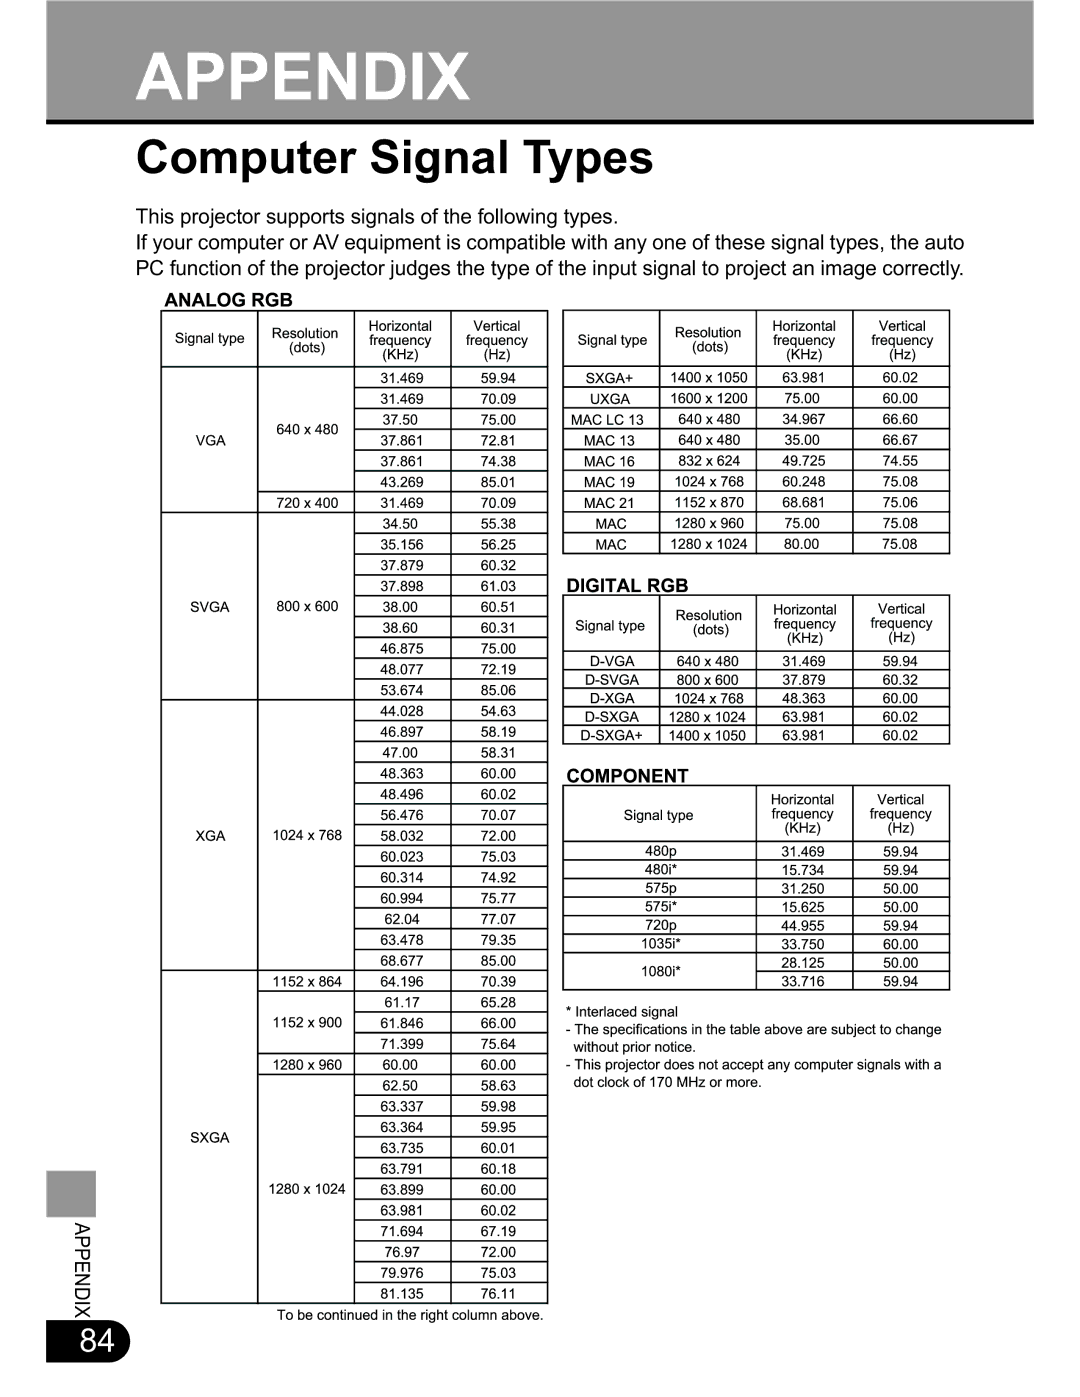 Canon SX20 manual Appendix, Computer Signal Types 